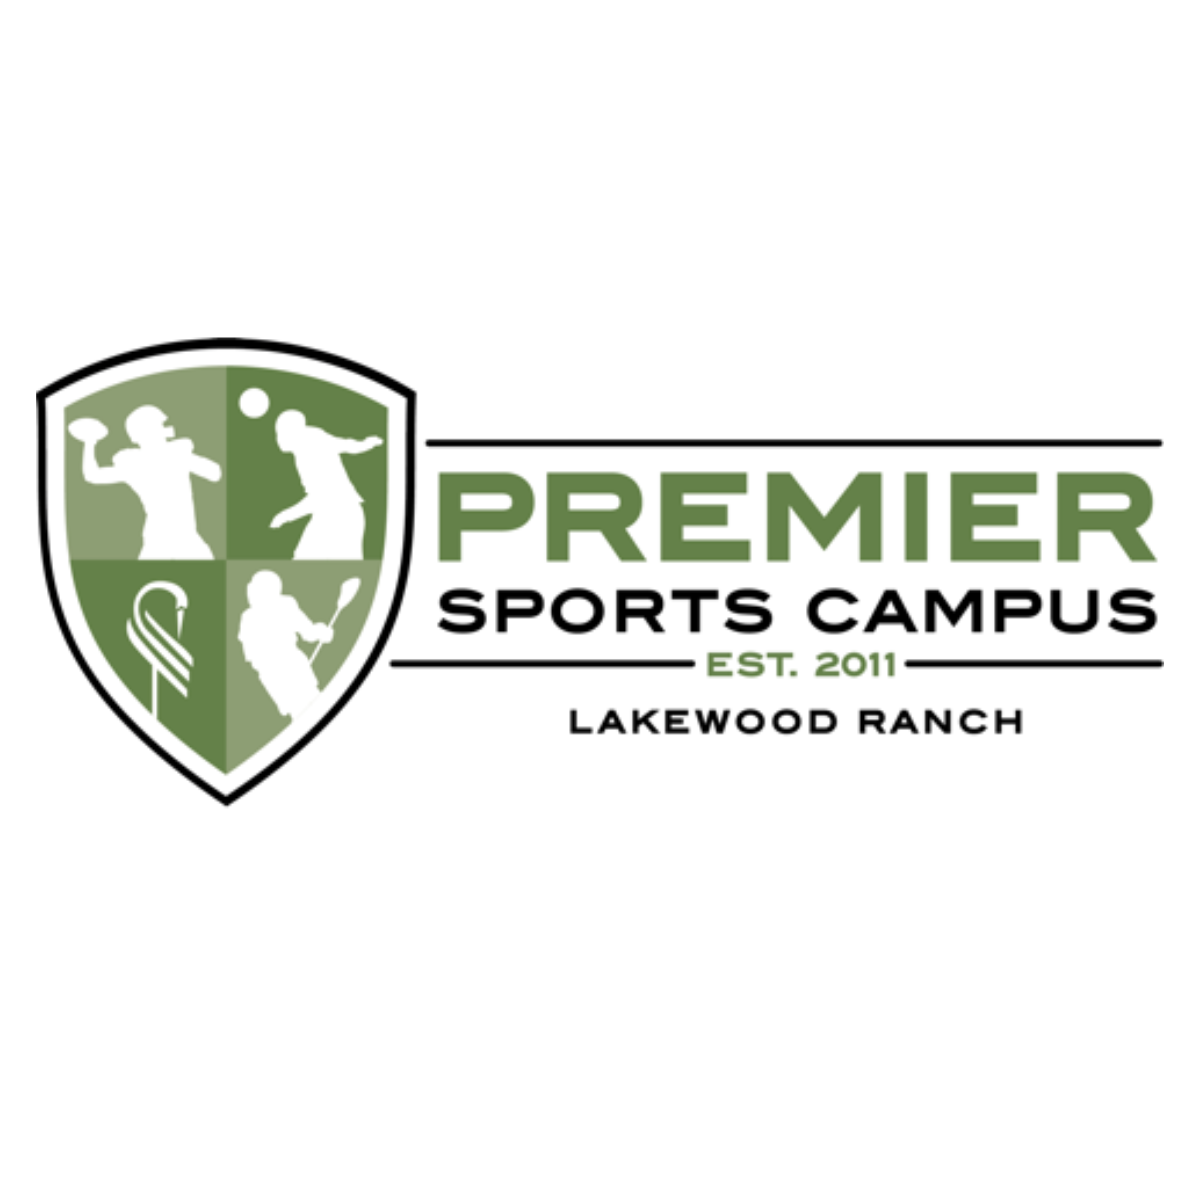 Premier Sports Campus, Lakwood Ranch Logo